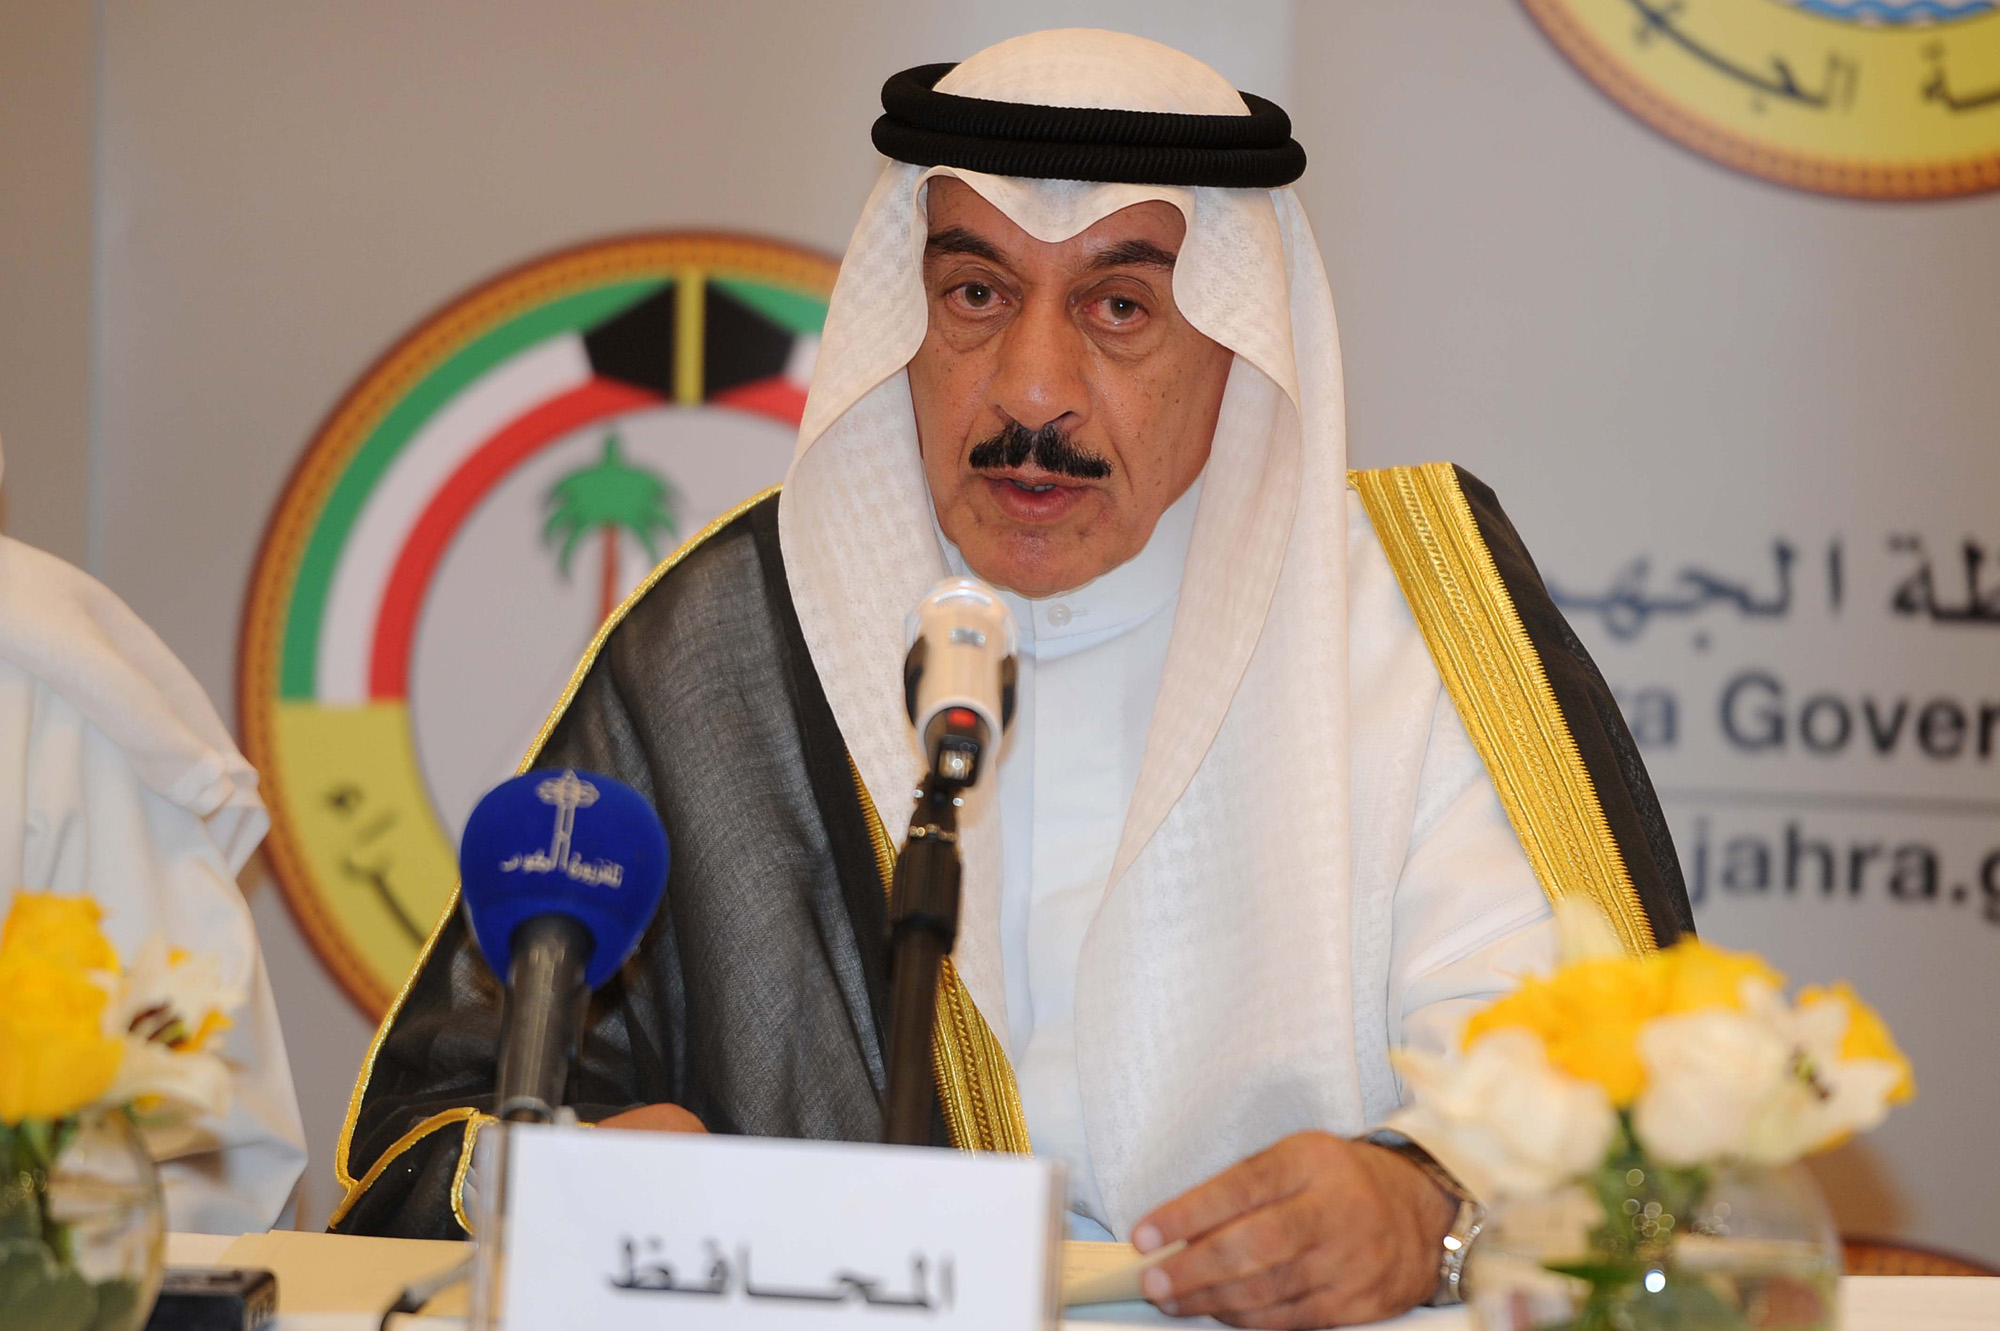 Al-Jahra Governor Lieutenant General (ret.) Fahad Al-Ameer